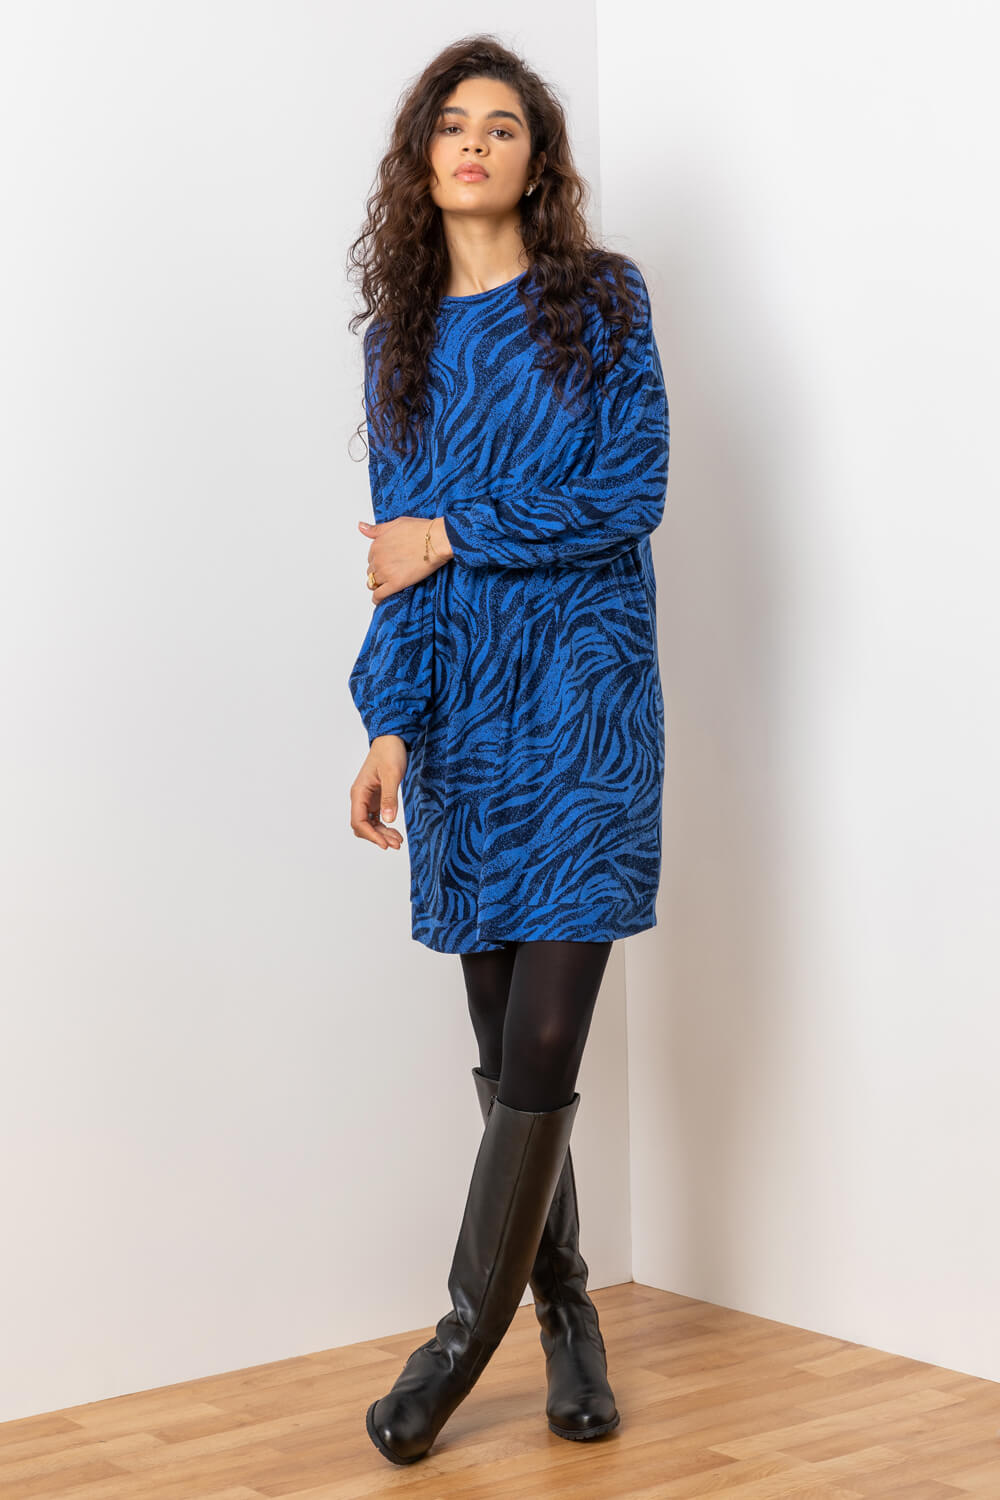 Royal Blue Animal Print Jacquard Sweater Dress, Image 3 of 5